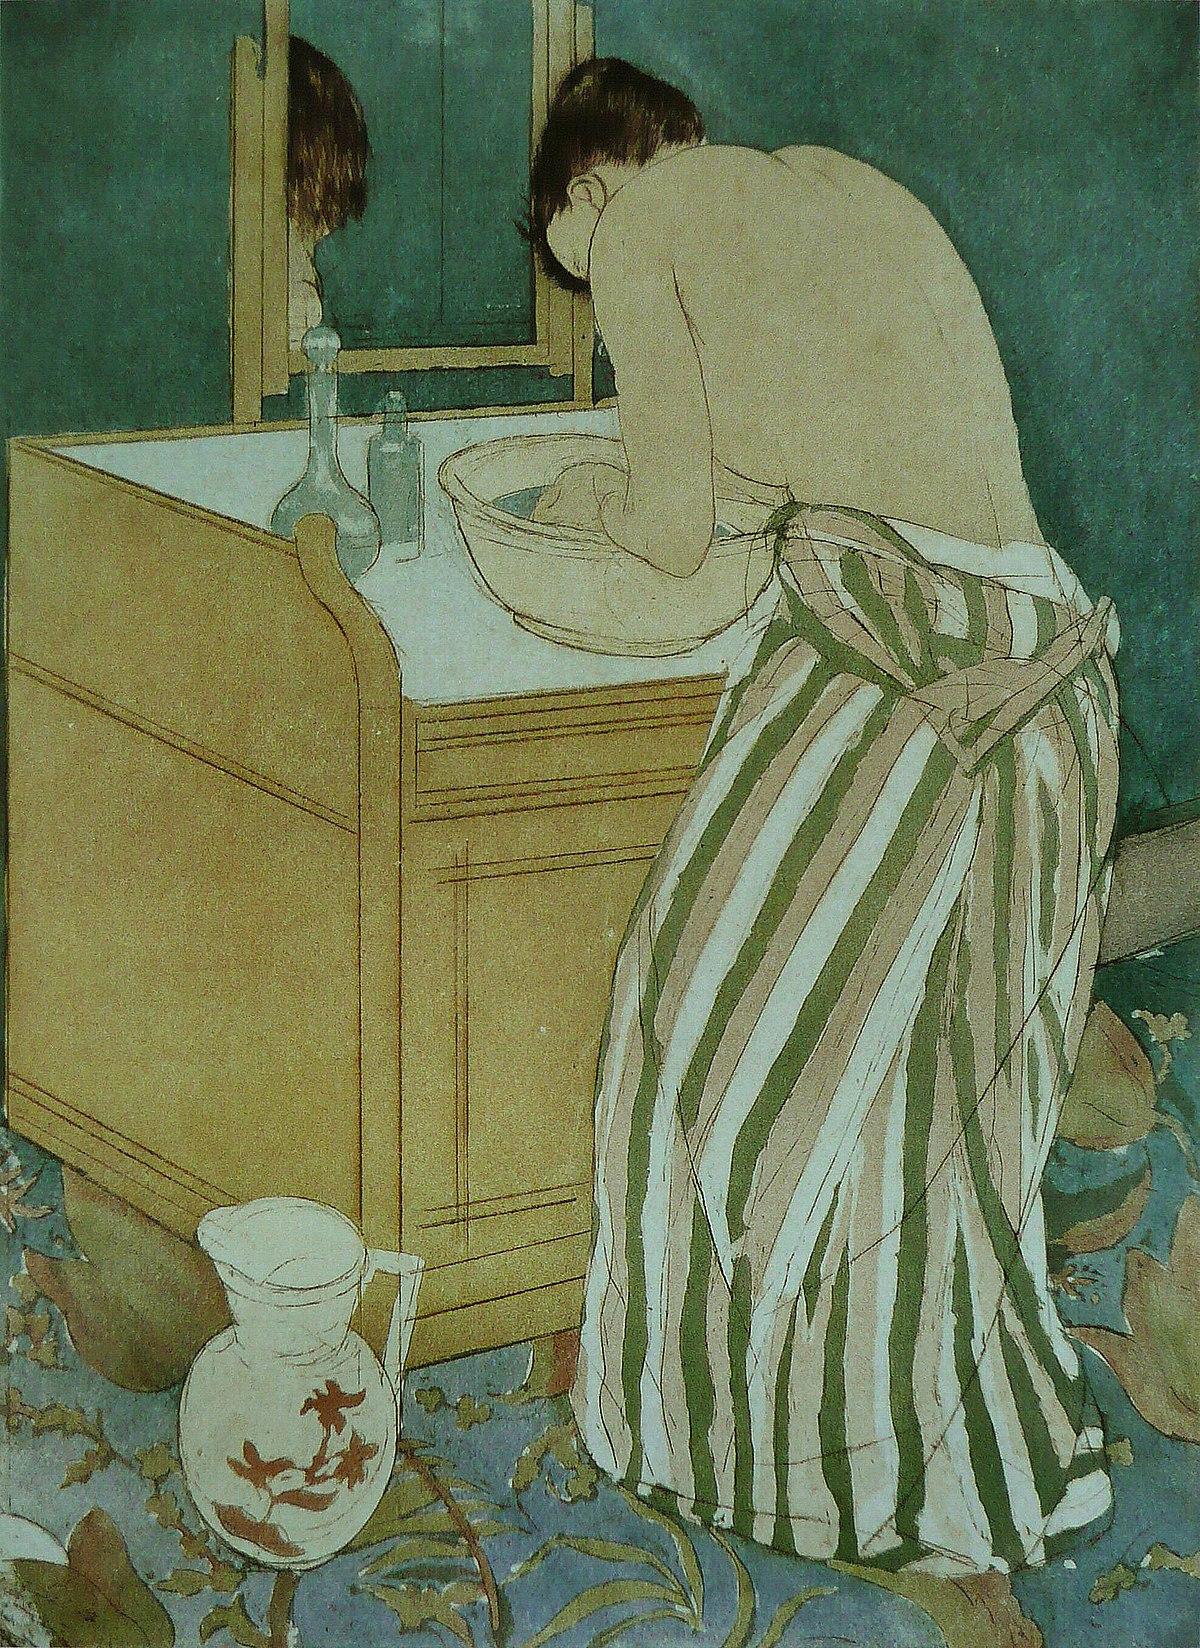 Mary Cassatt, The bath, 1890